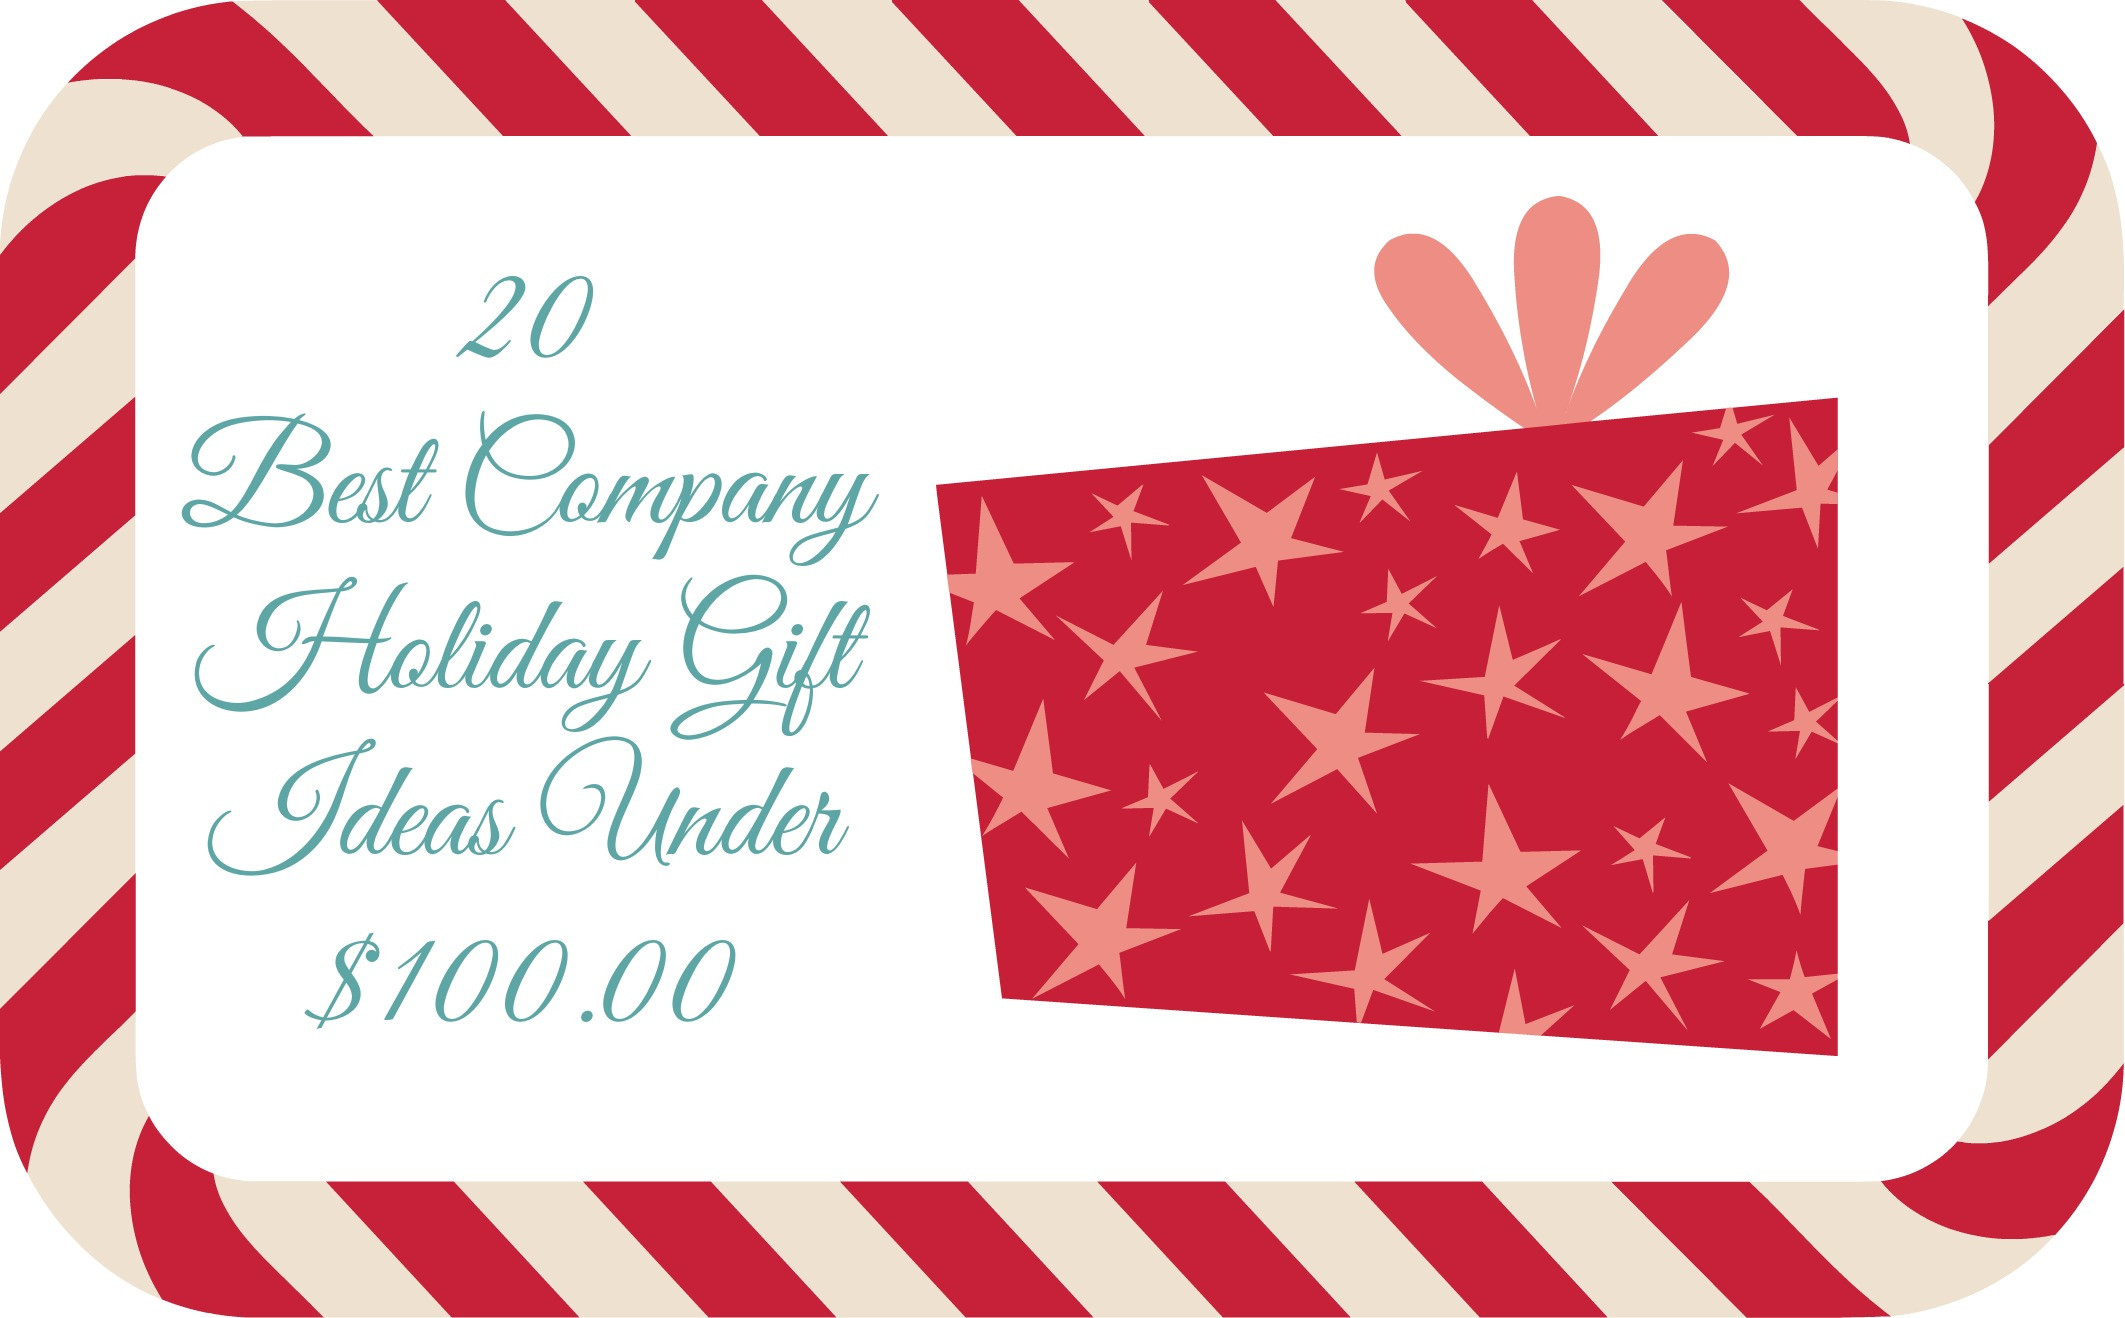 Company Holiday Gift Ideas
 20 Best pany Holiday Gift Ideas Under $100 00